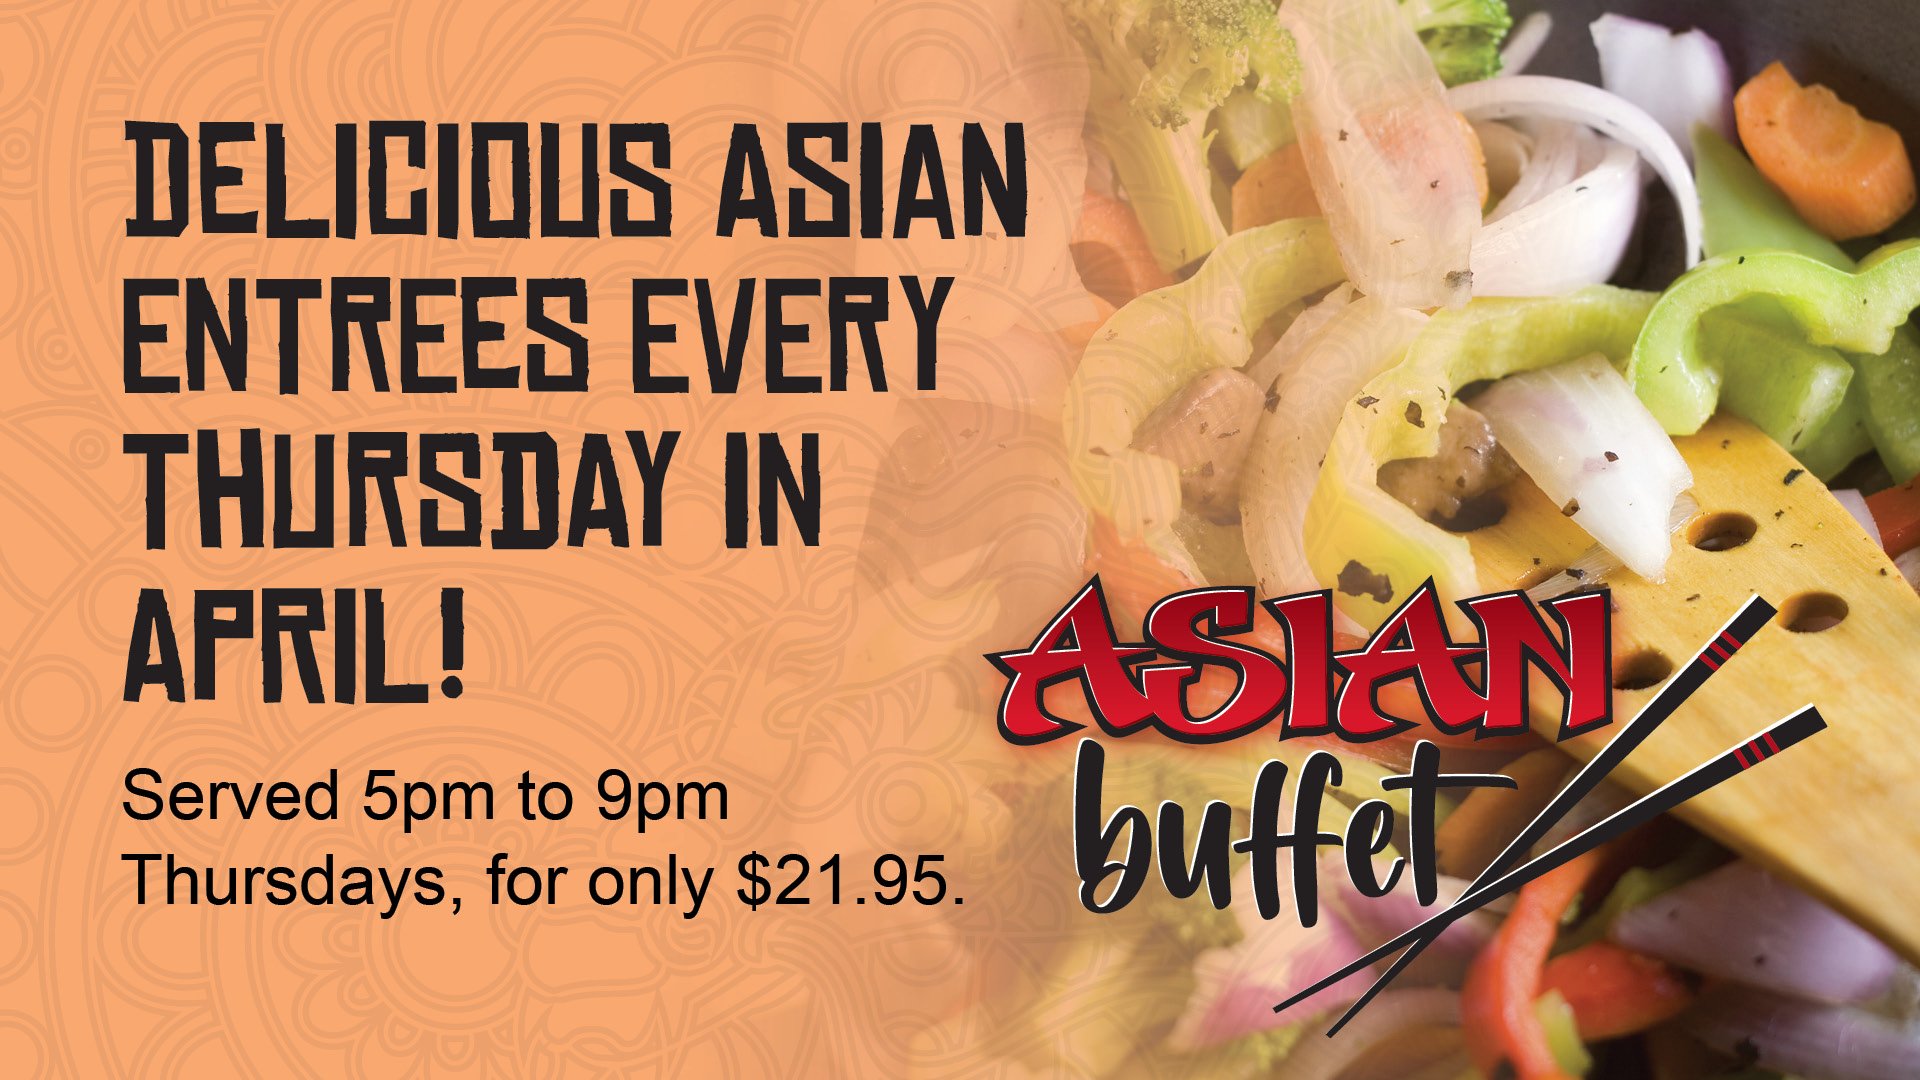 Asian Buffet Every Thursday for $21.95